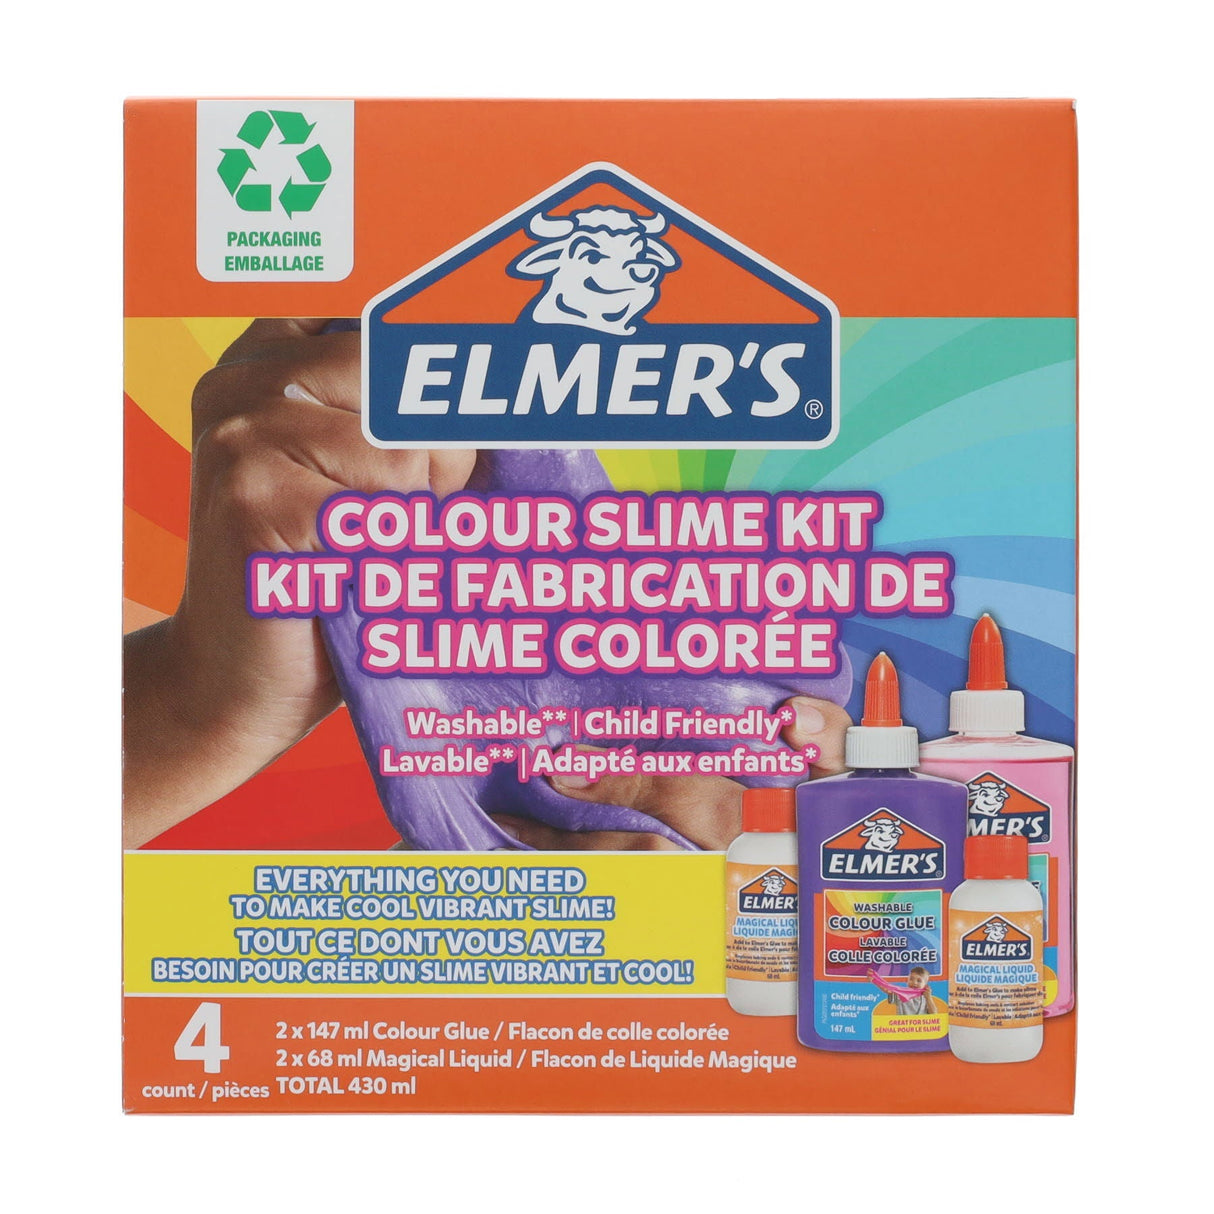 Elmer's Colour Slime Kit | Stationery Shop UK